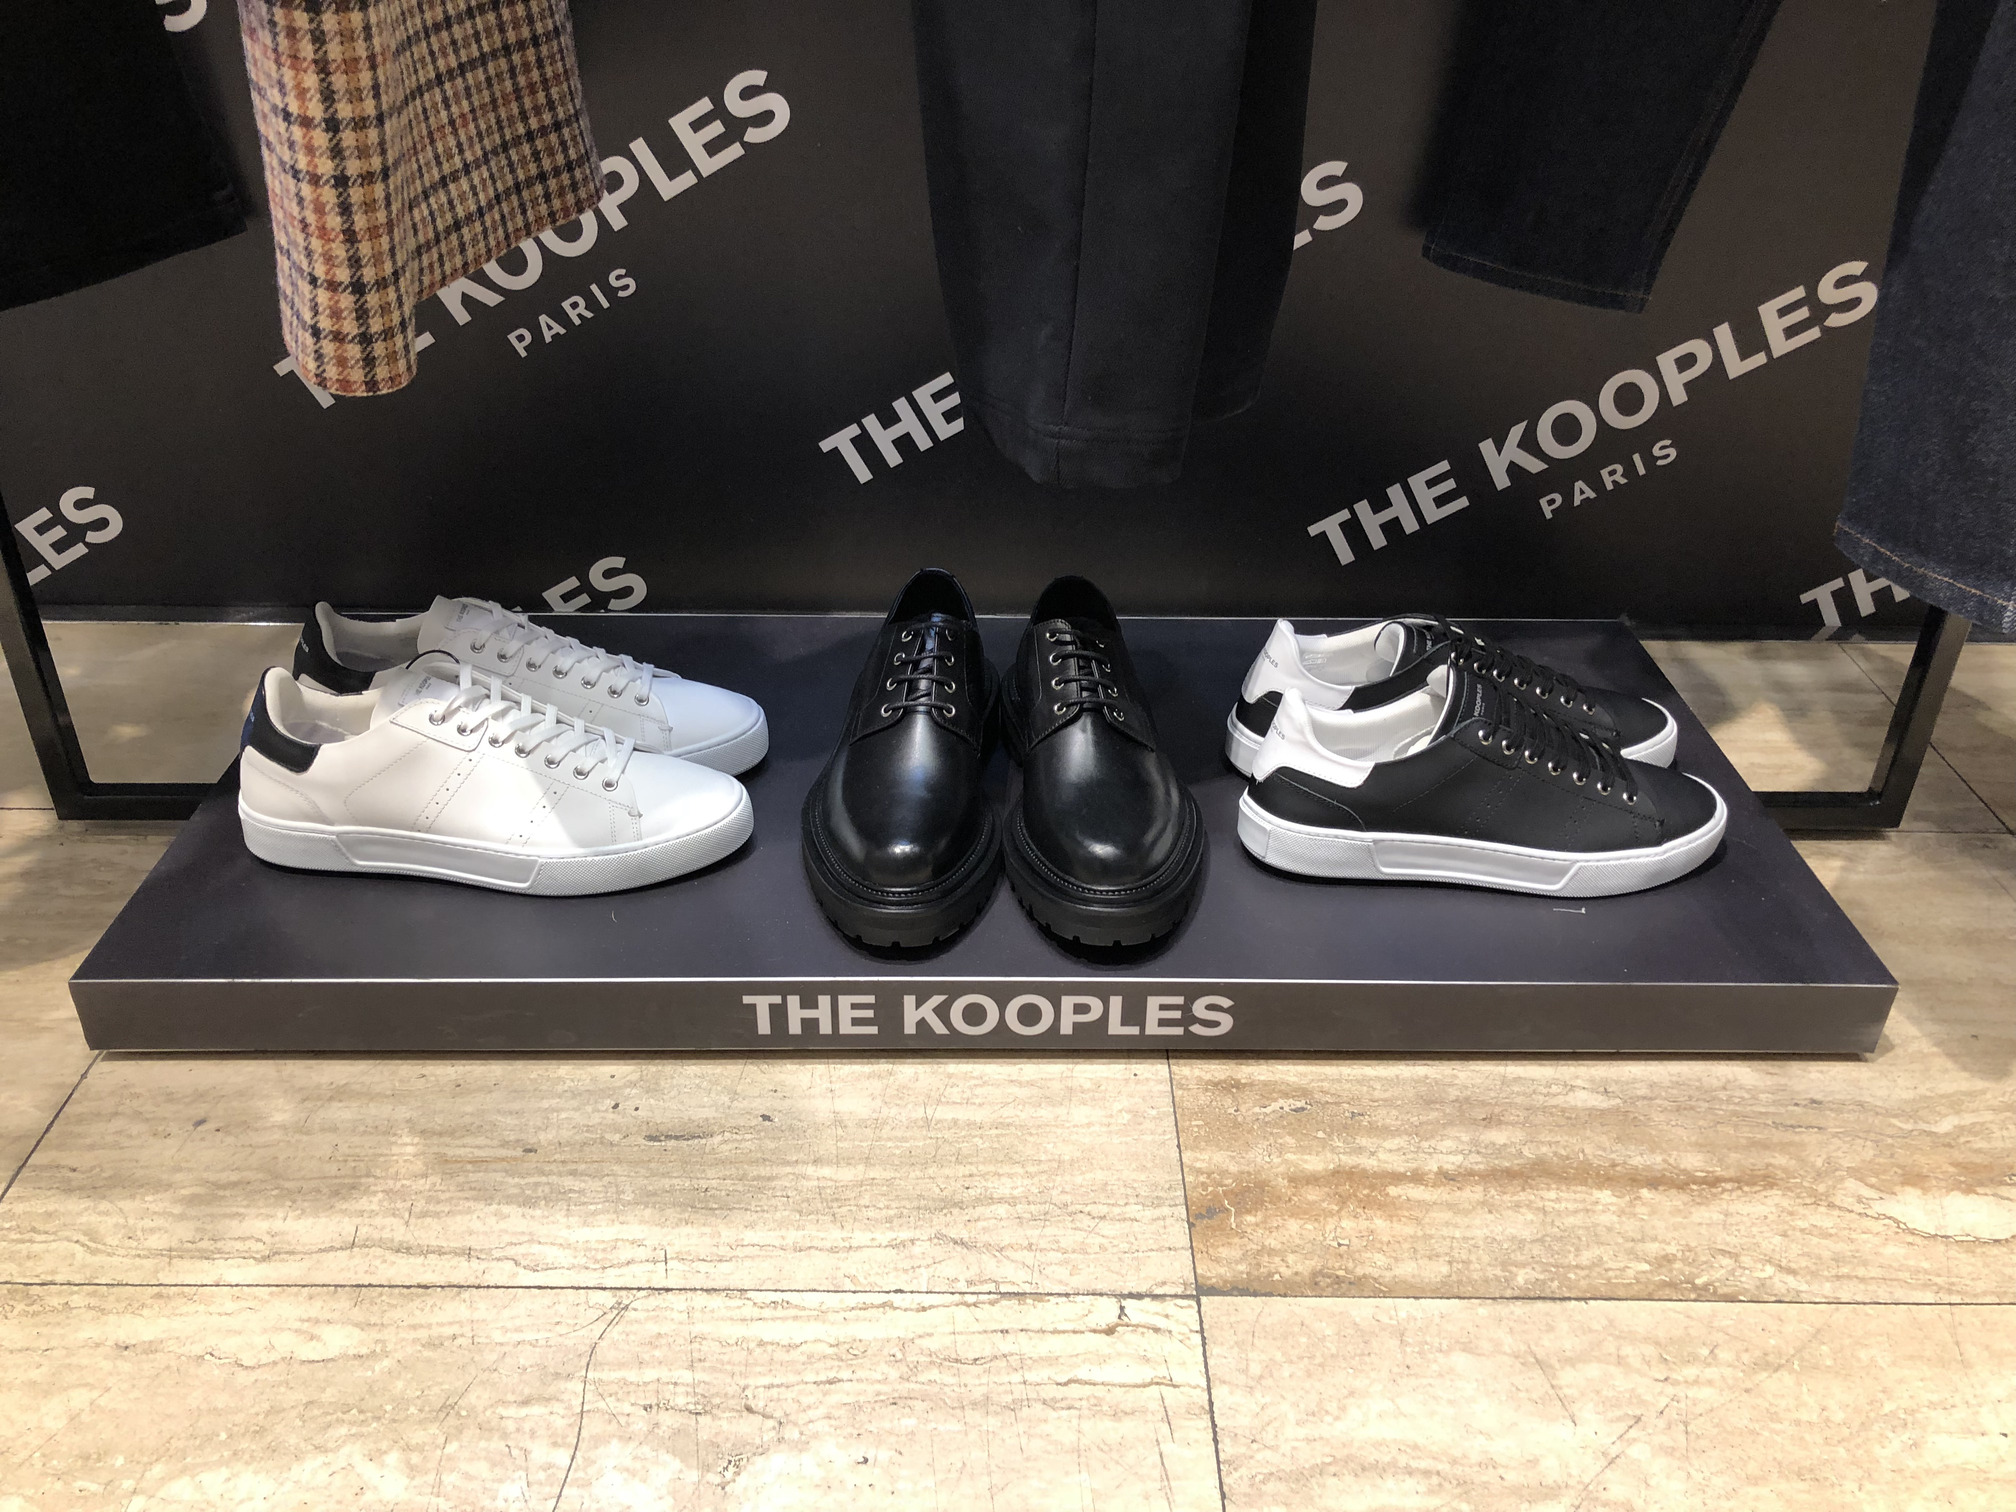 The Kooples pop up store 3